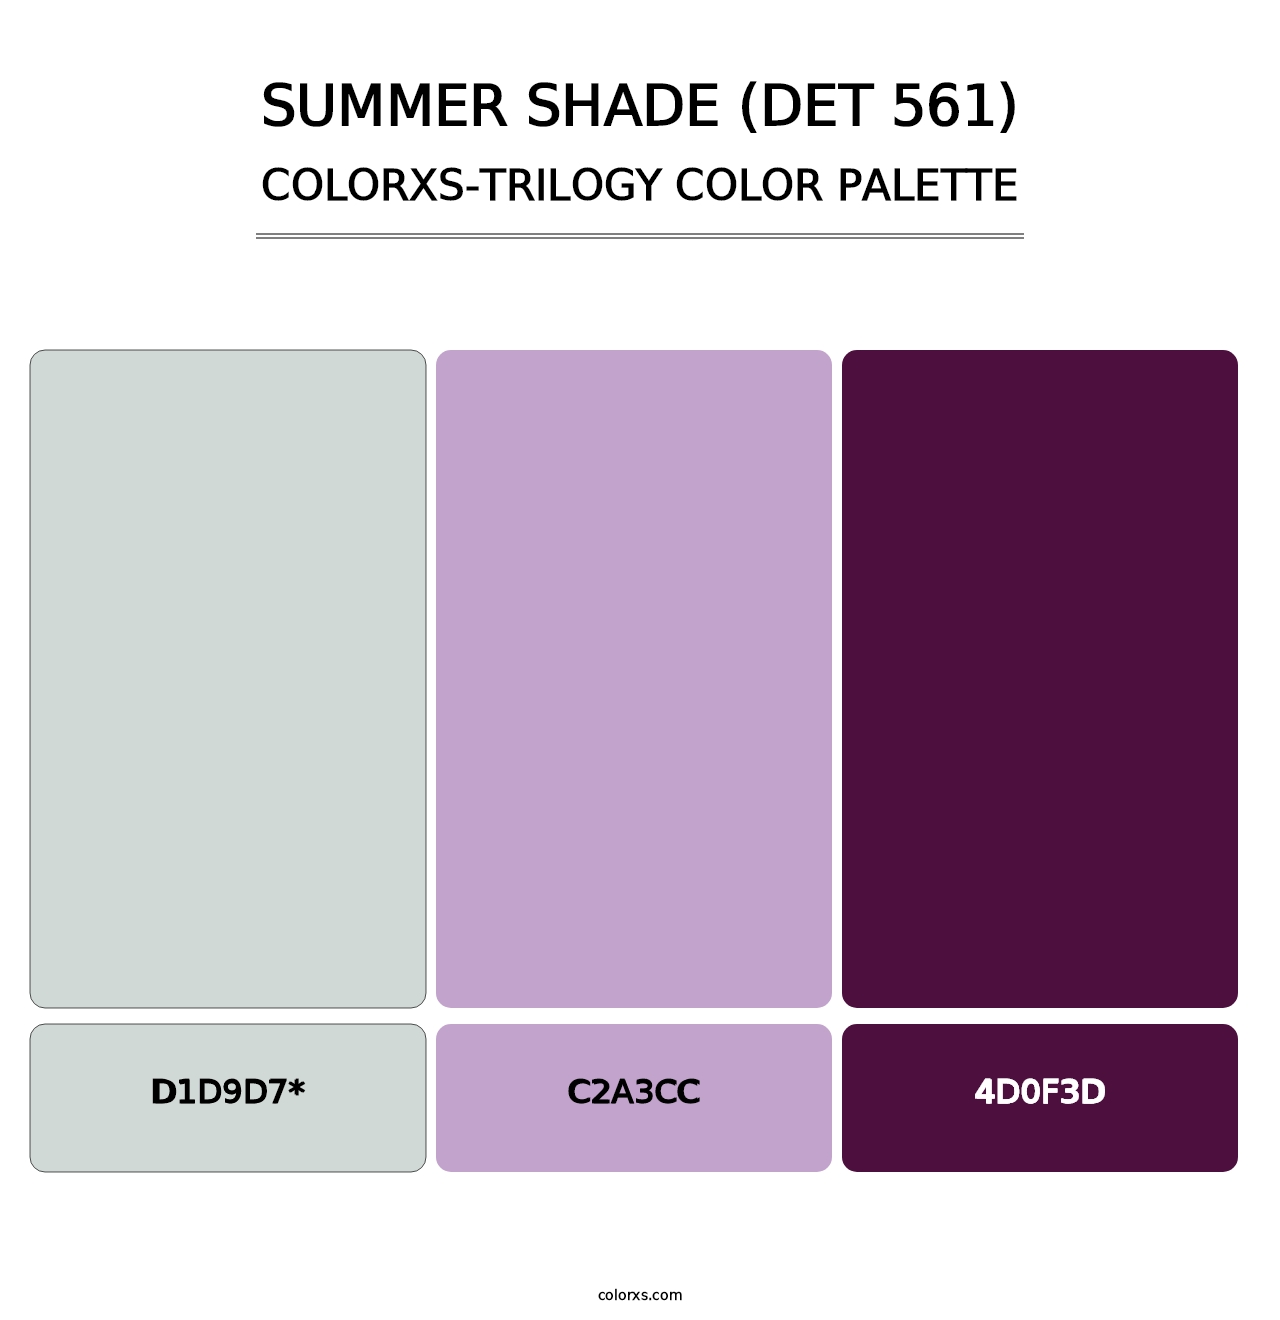 Summer Shade (DET 561) - Colorxs Trilogy Palette